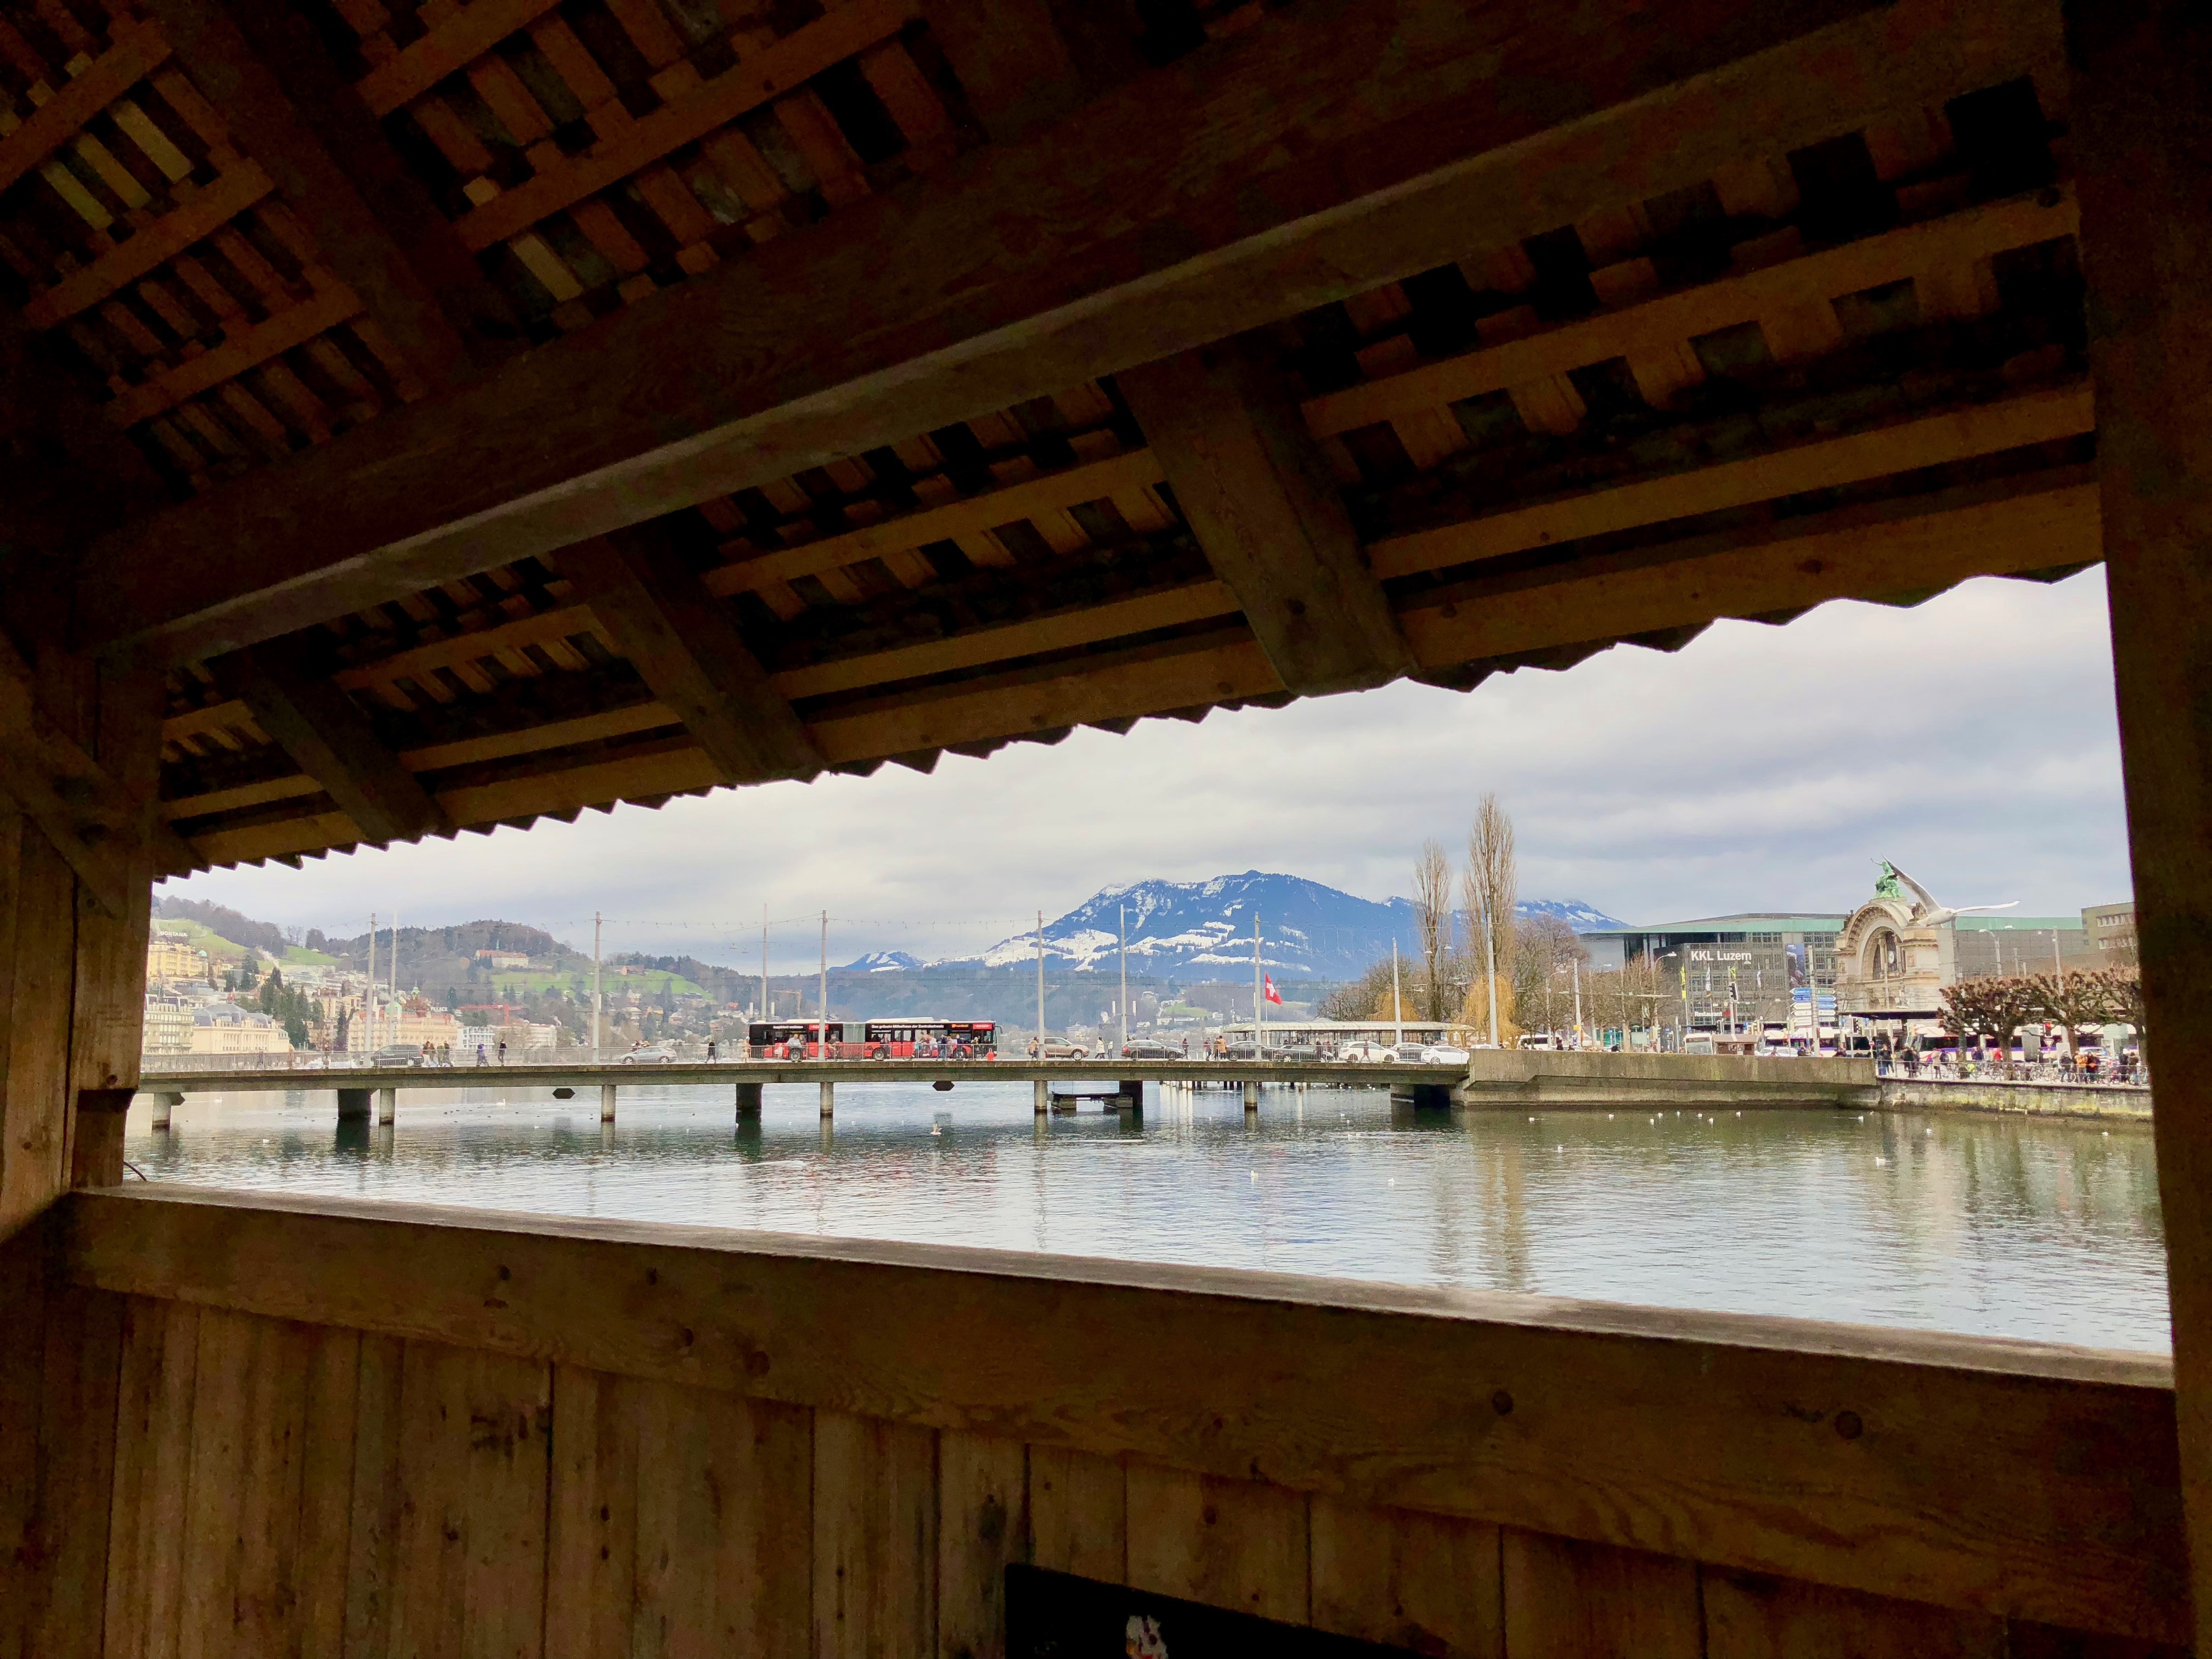 A picture taken from inside the Kapellbrücke, a wooden footbridge in Lucerne, Switzerland.